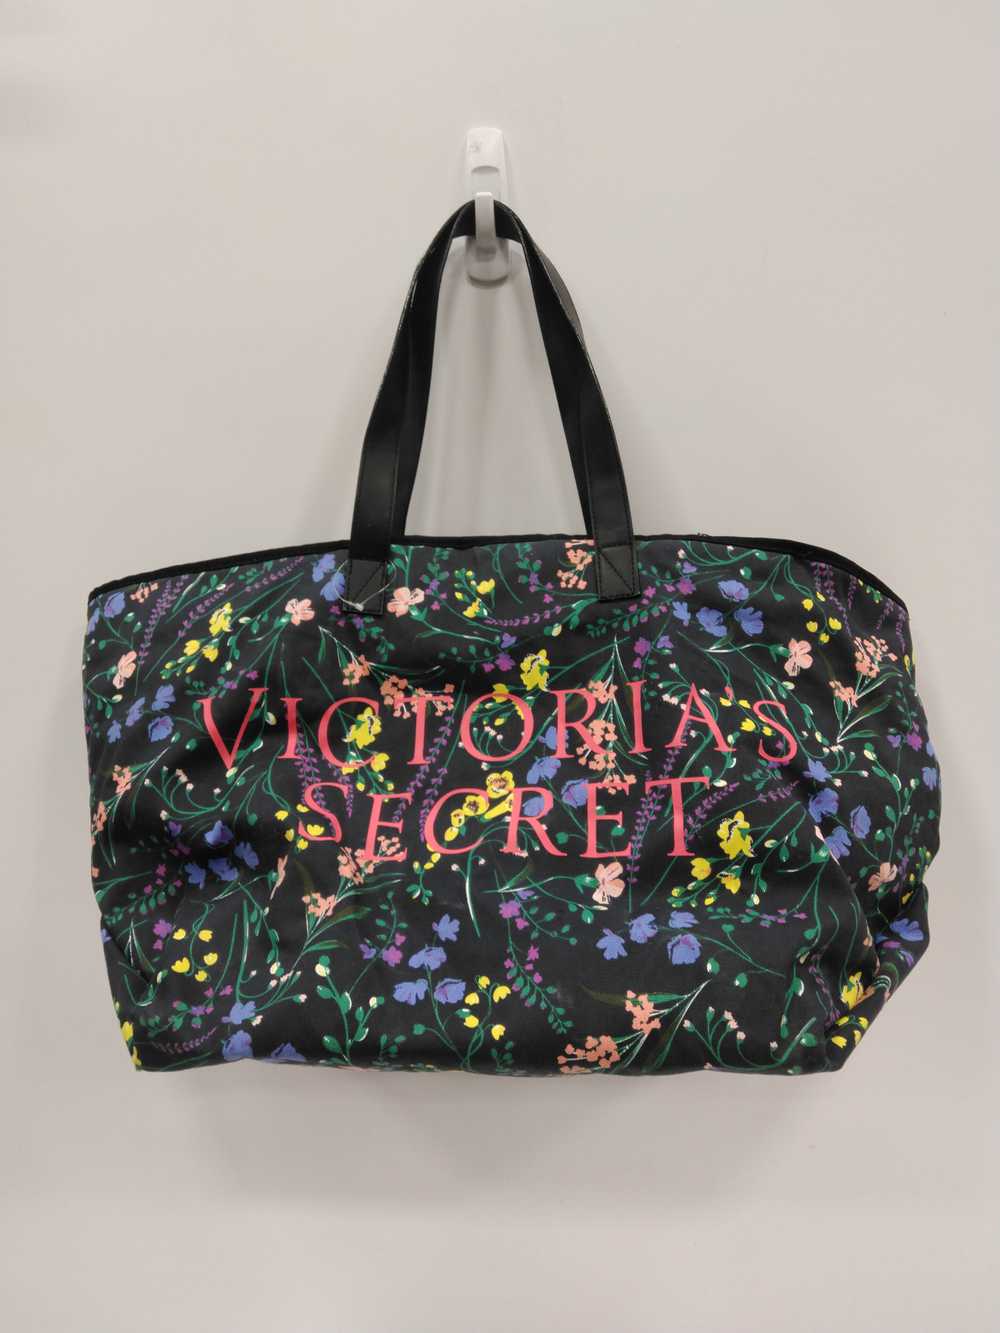 Bundle Of 4 Victoria Secret Tote Bags - image 3